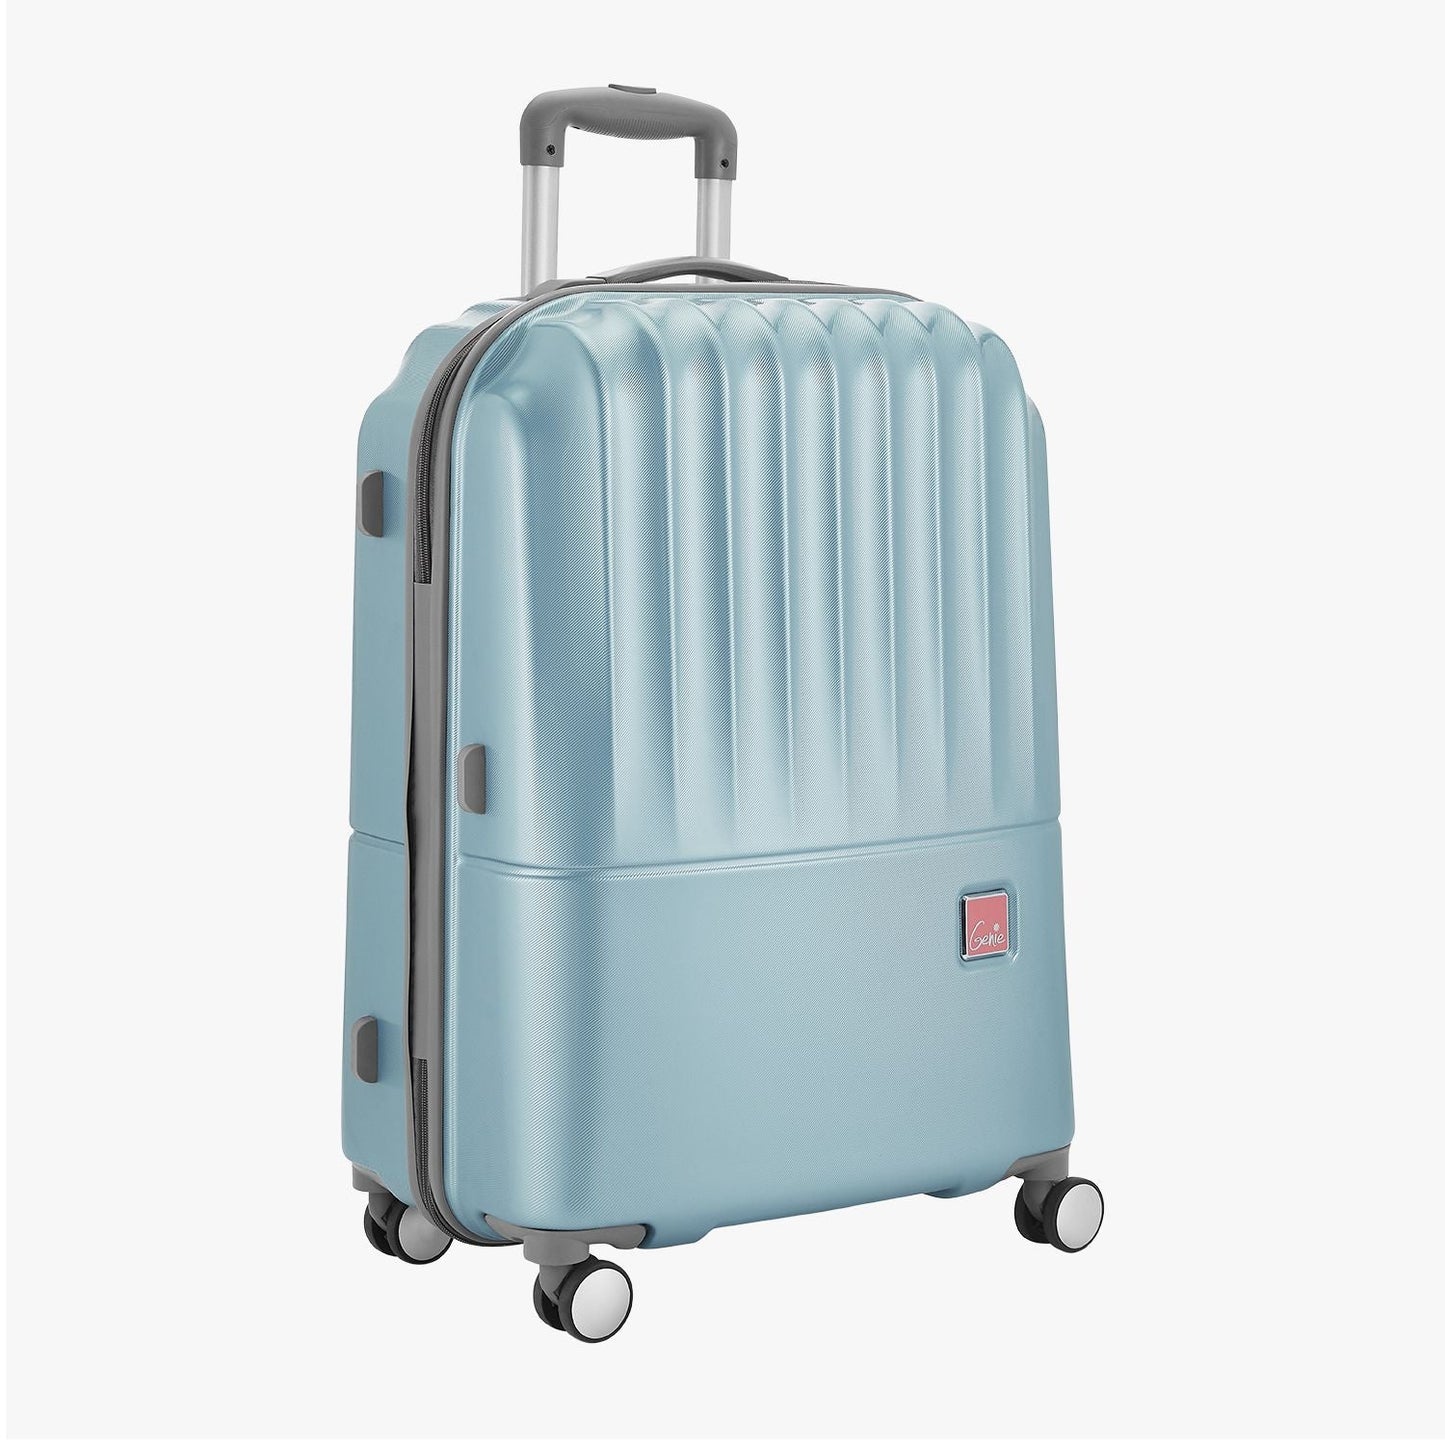 Genie Palm Hard Luggage Suitcase